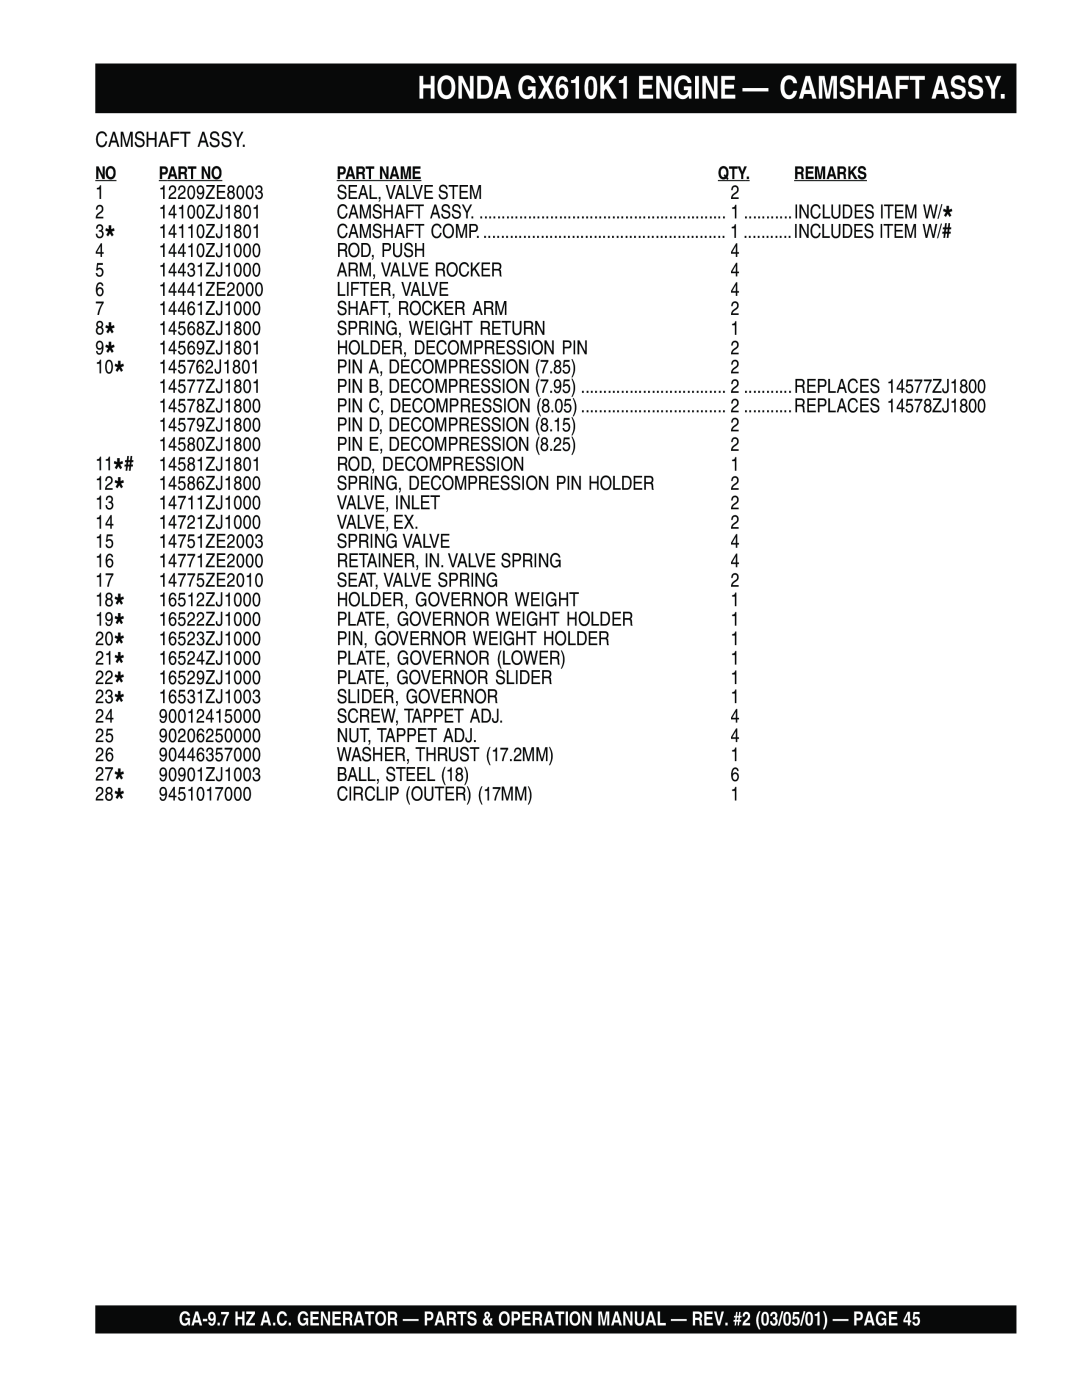 Multiquip GA-9.7 HZ operation manual HONDA GX610K1 ENGINE — CAMSHAFT ASSY, 1 2 34 5 6 7 8 9 10 11*# 1213 14 15 16 17 18 19 